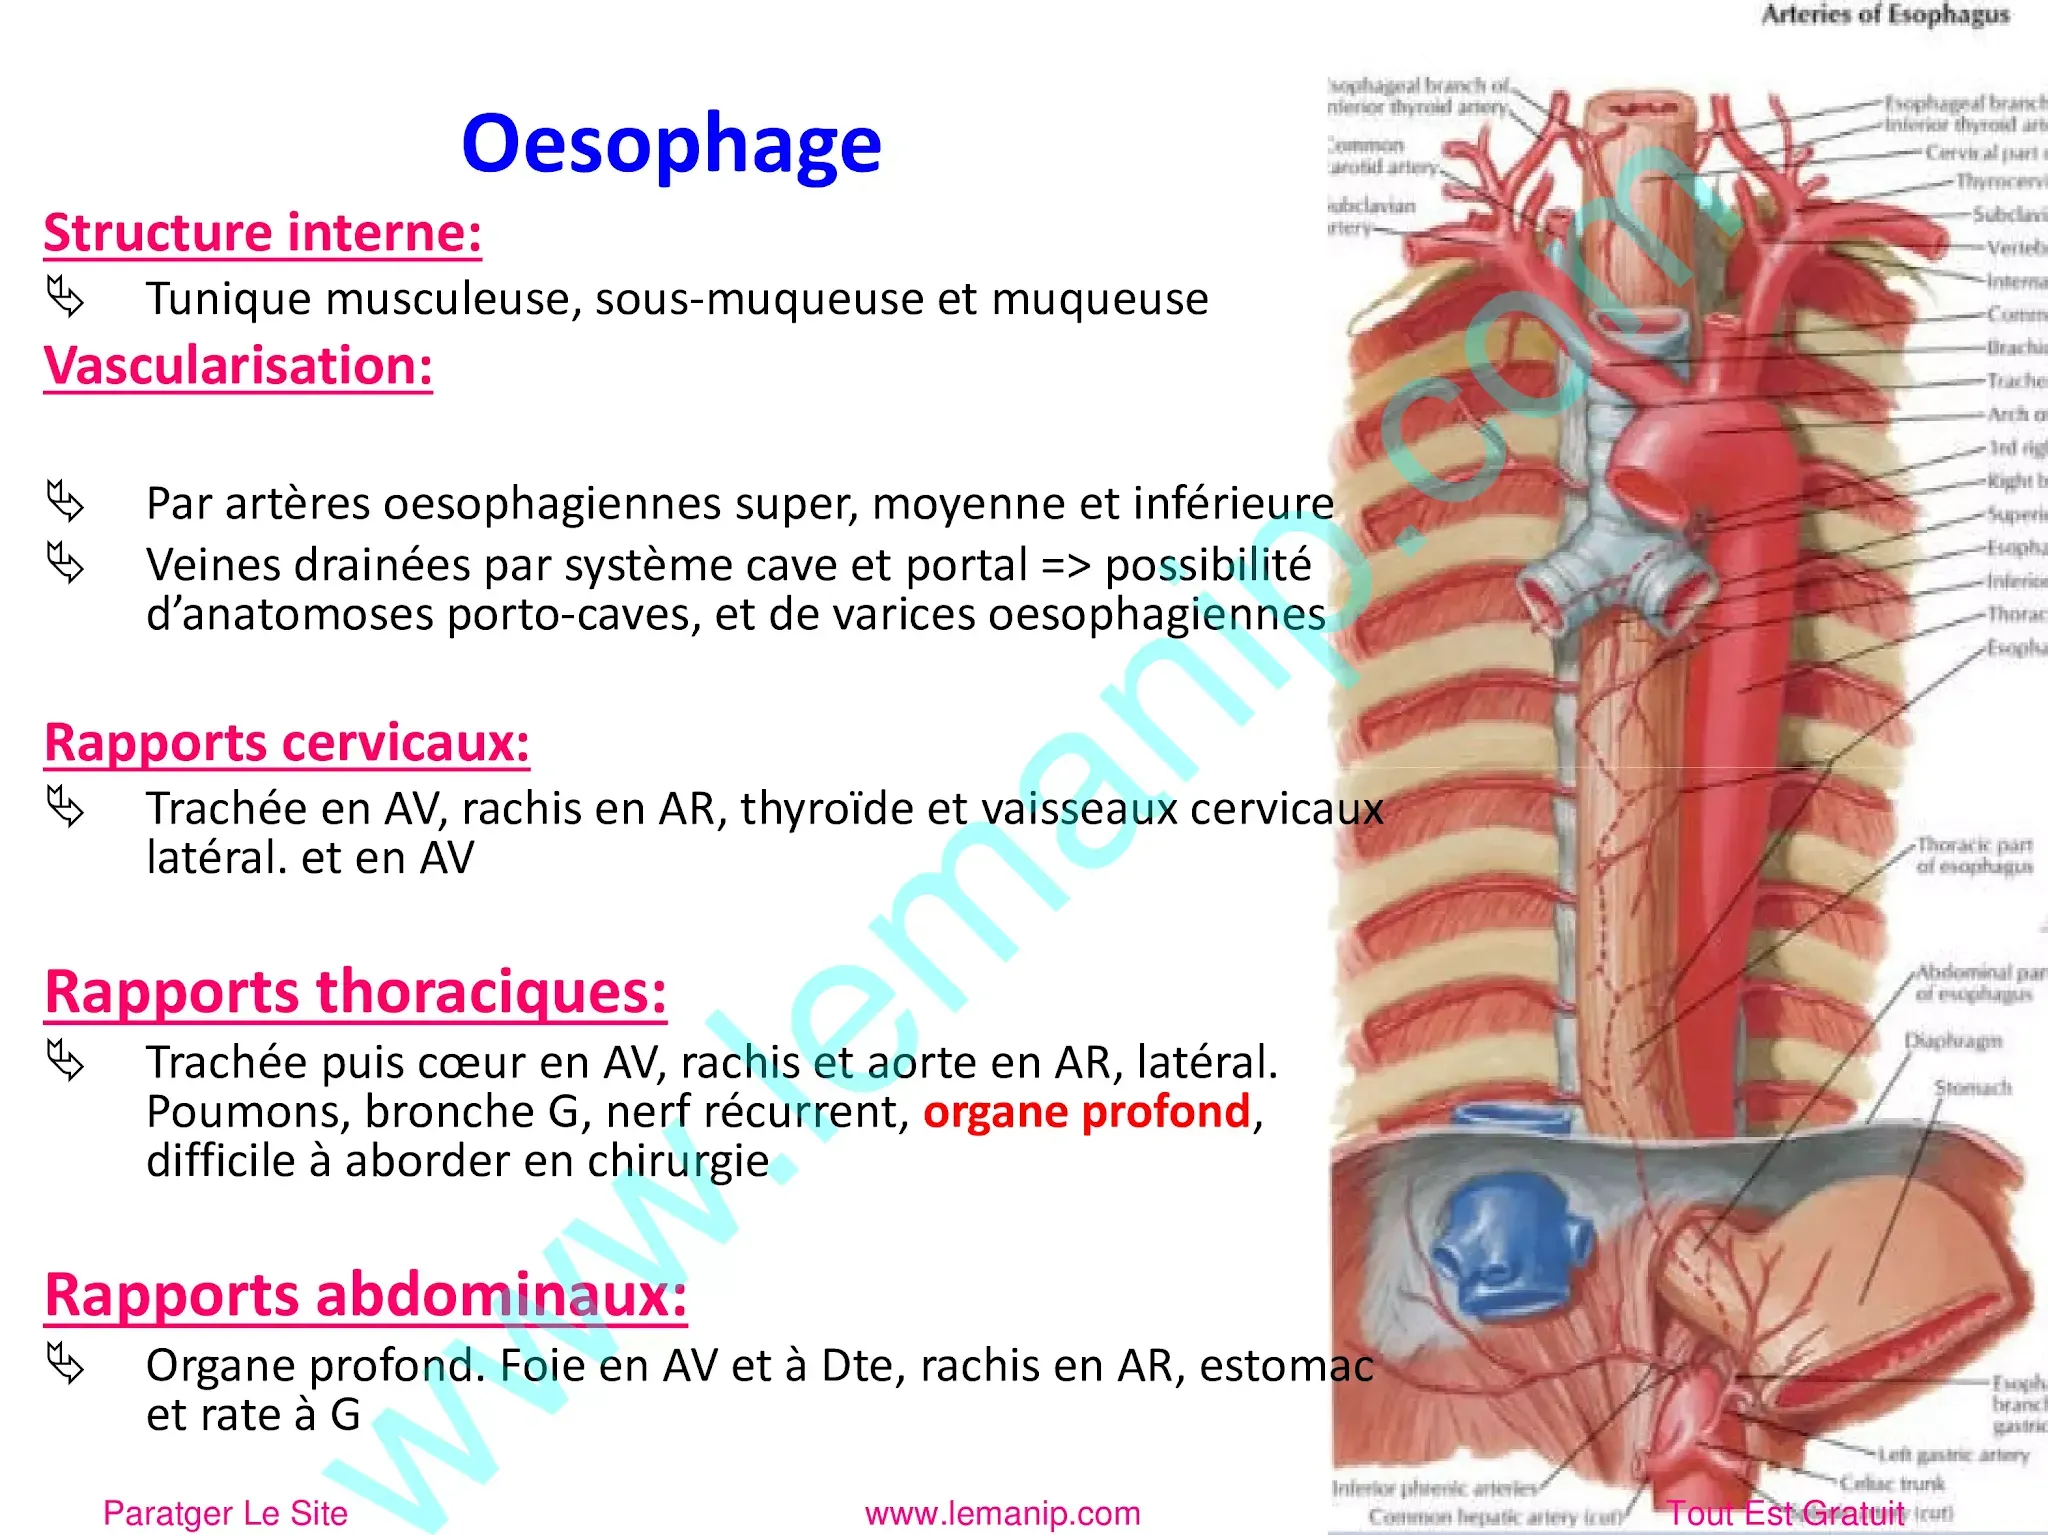 Oesophage: Structure interne et Vascularisation